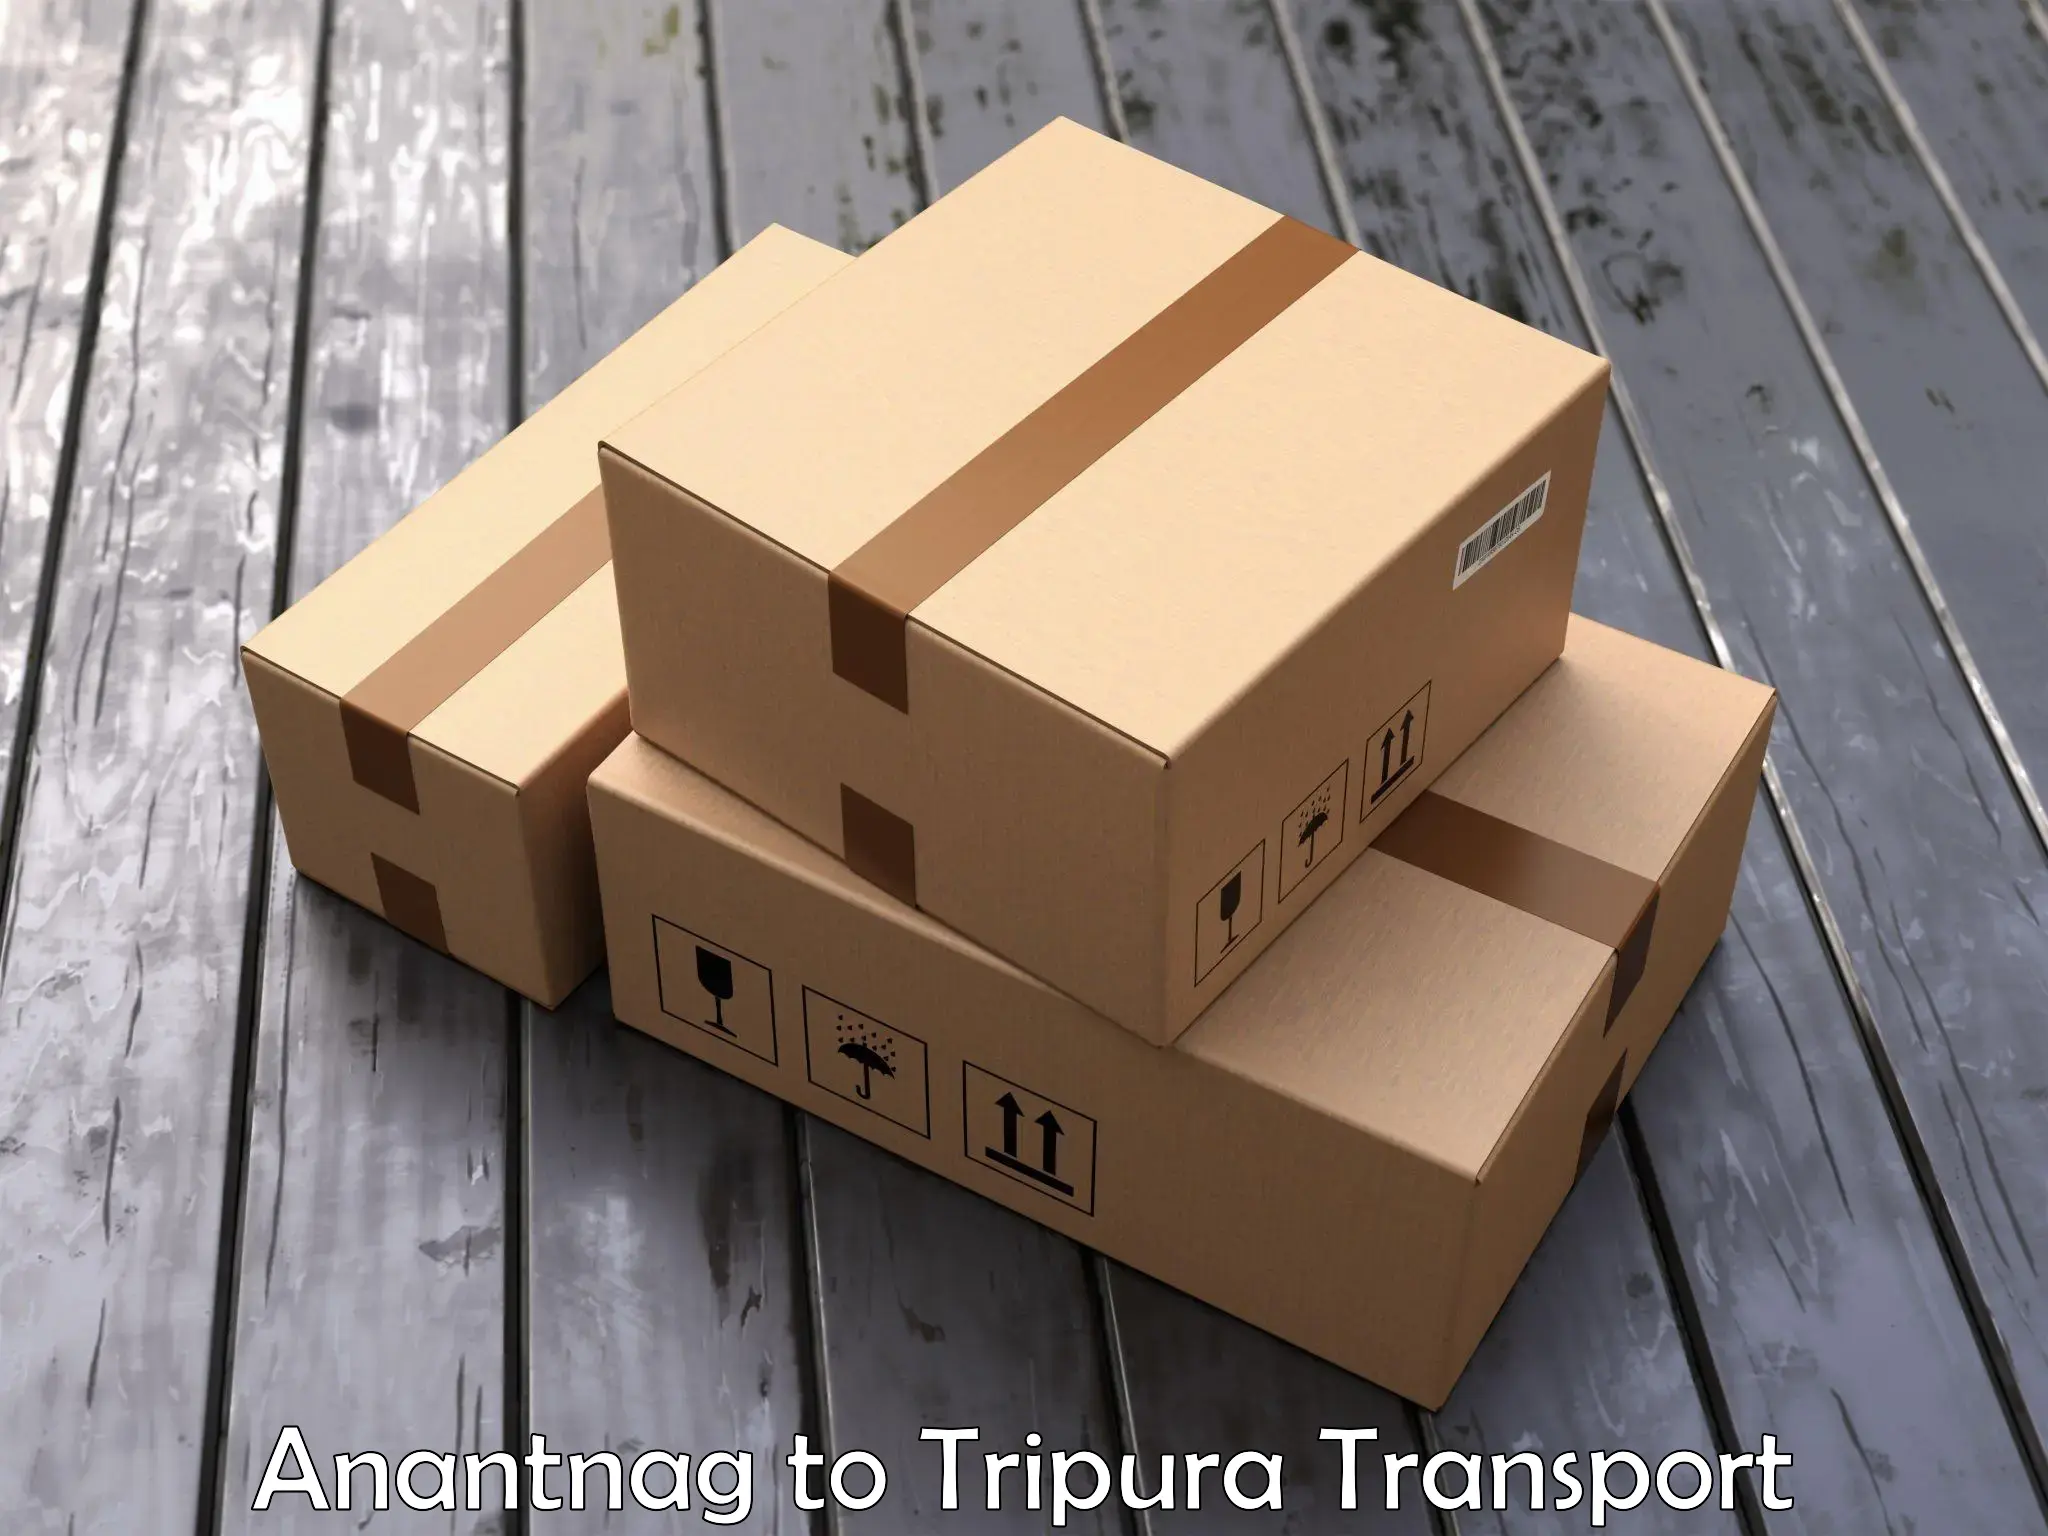 Daily transport service Anantnag to Udaipur Tripura